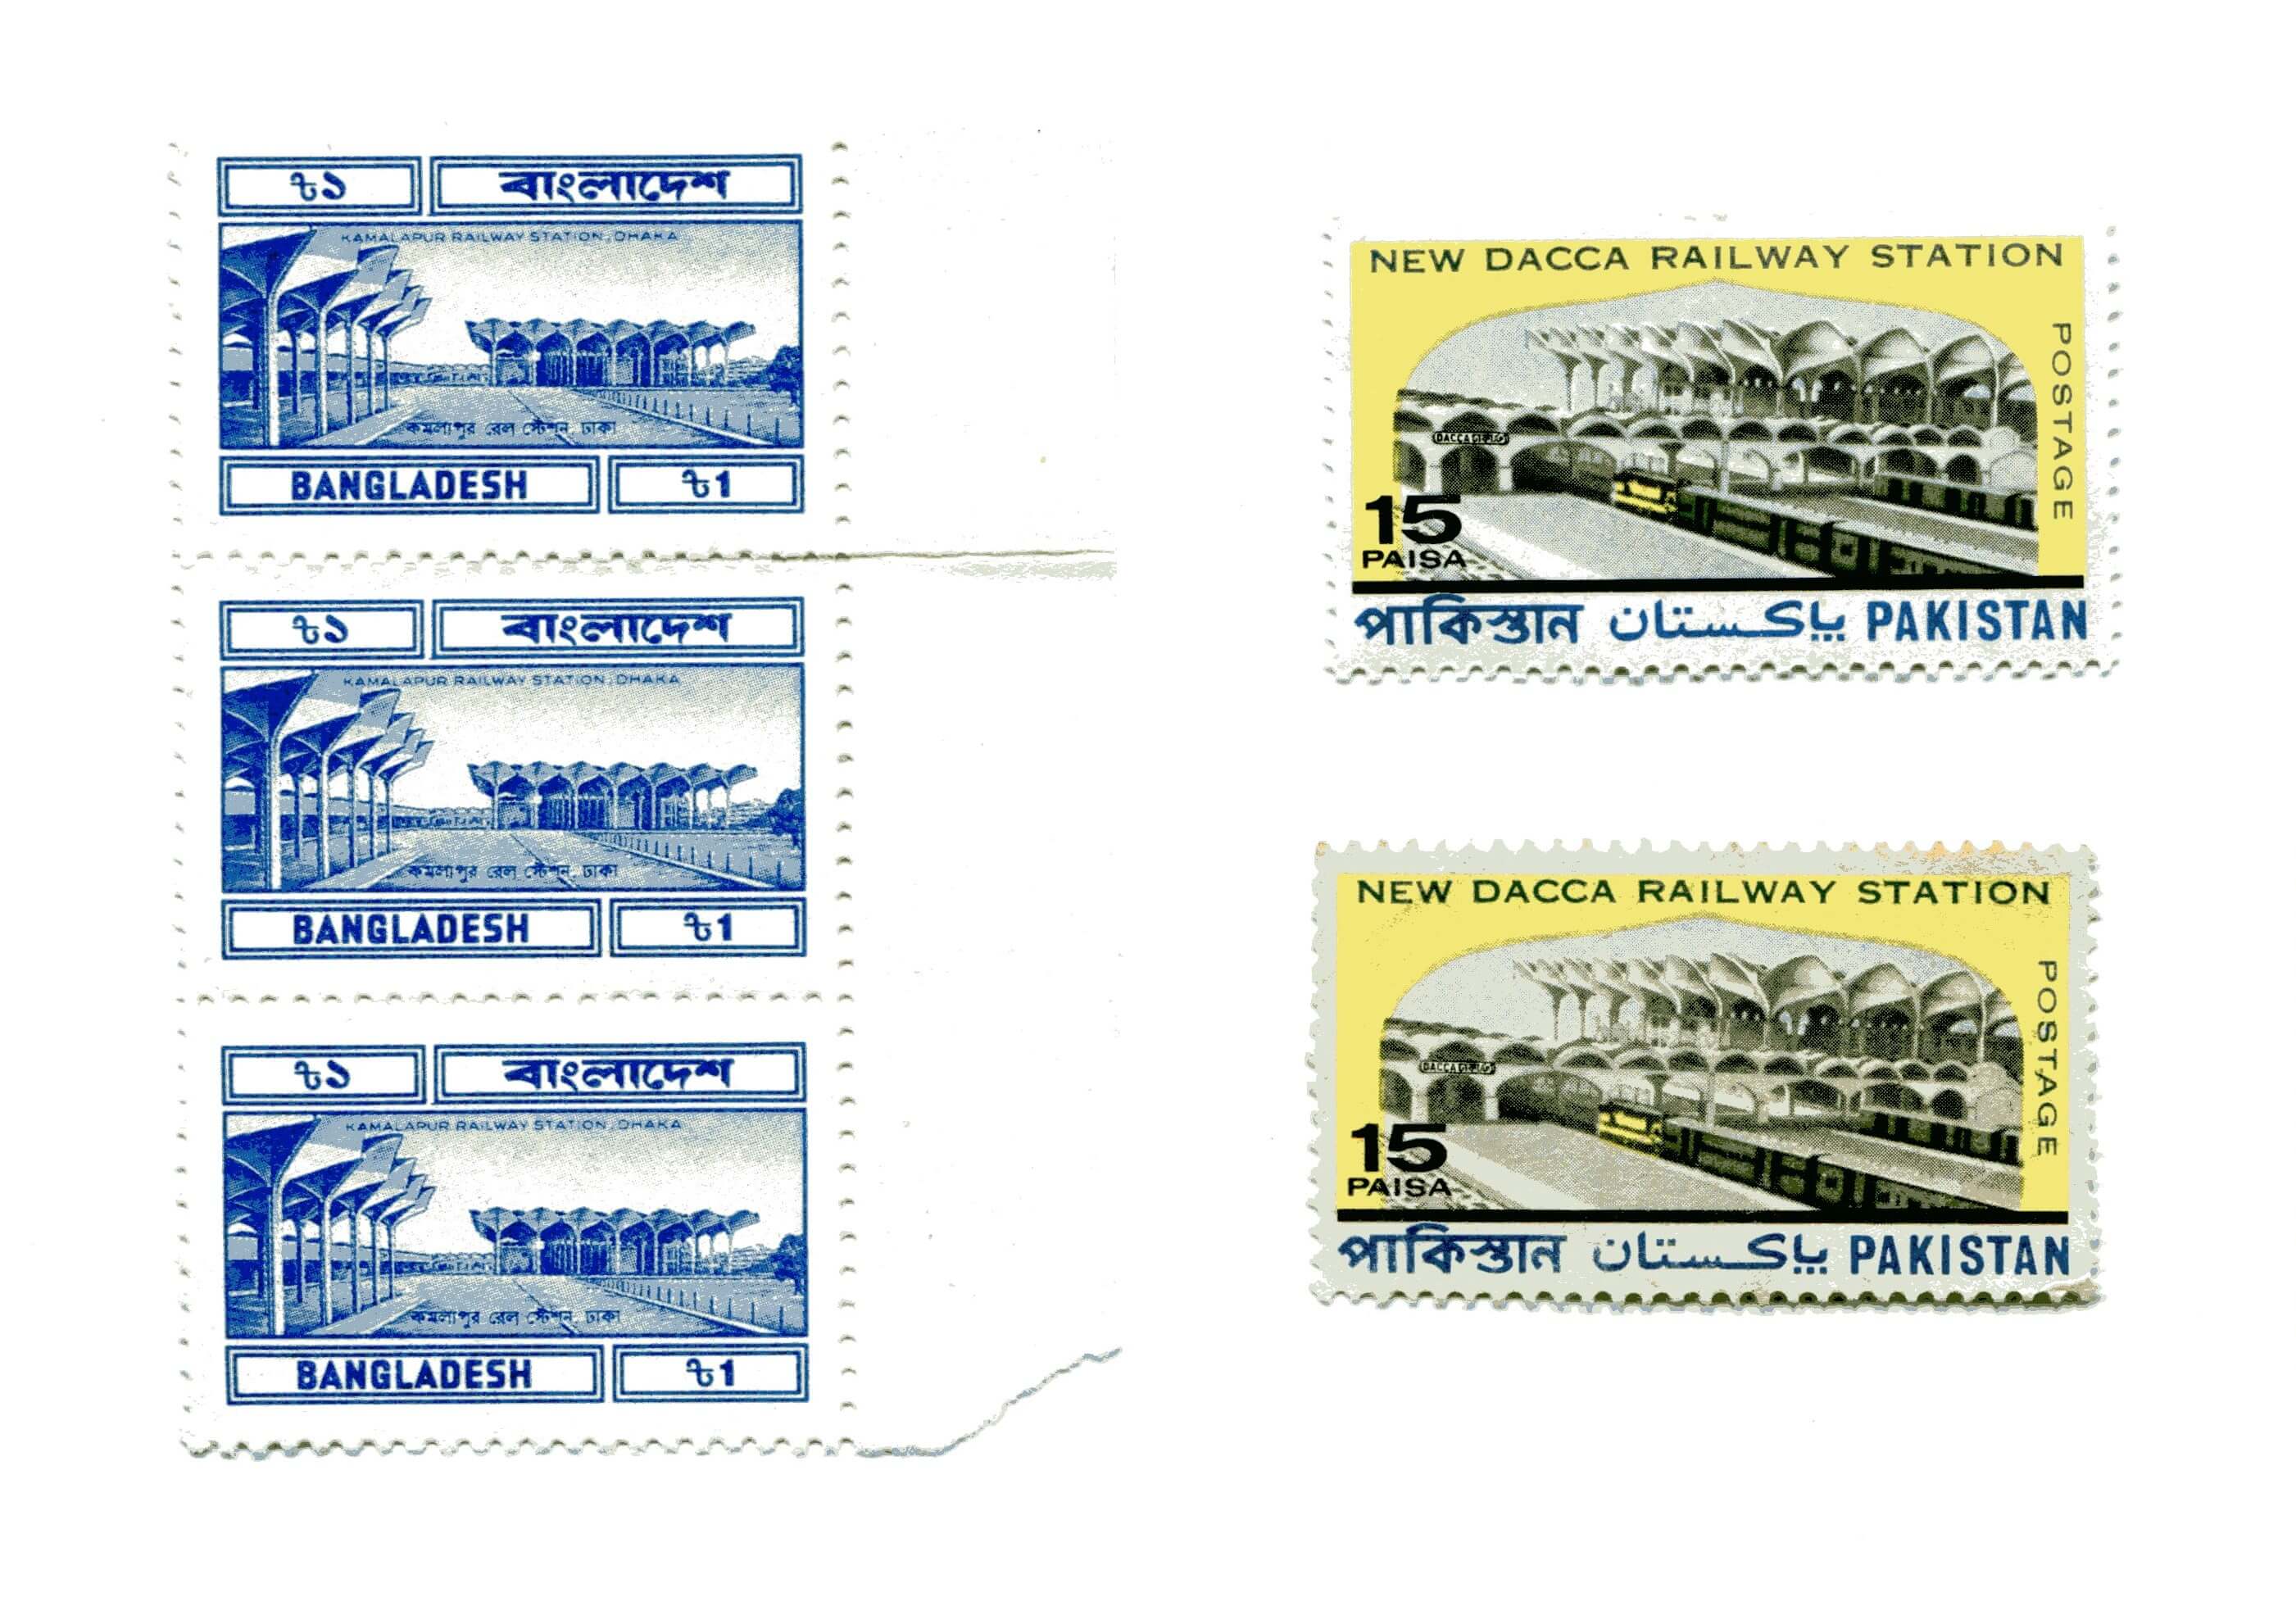 POstage stamps bearing the Kamalapur Railway Station